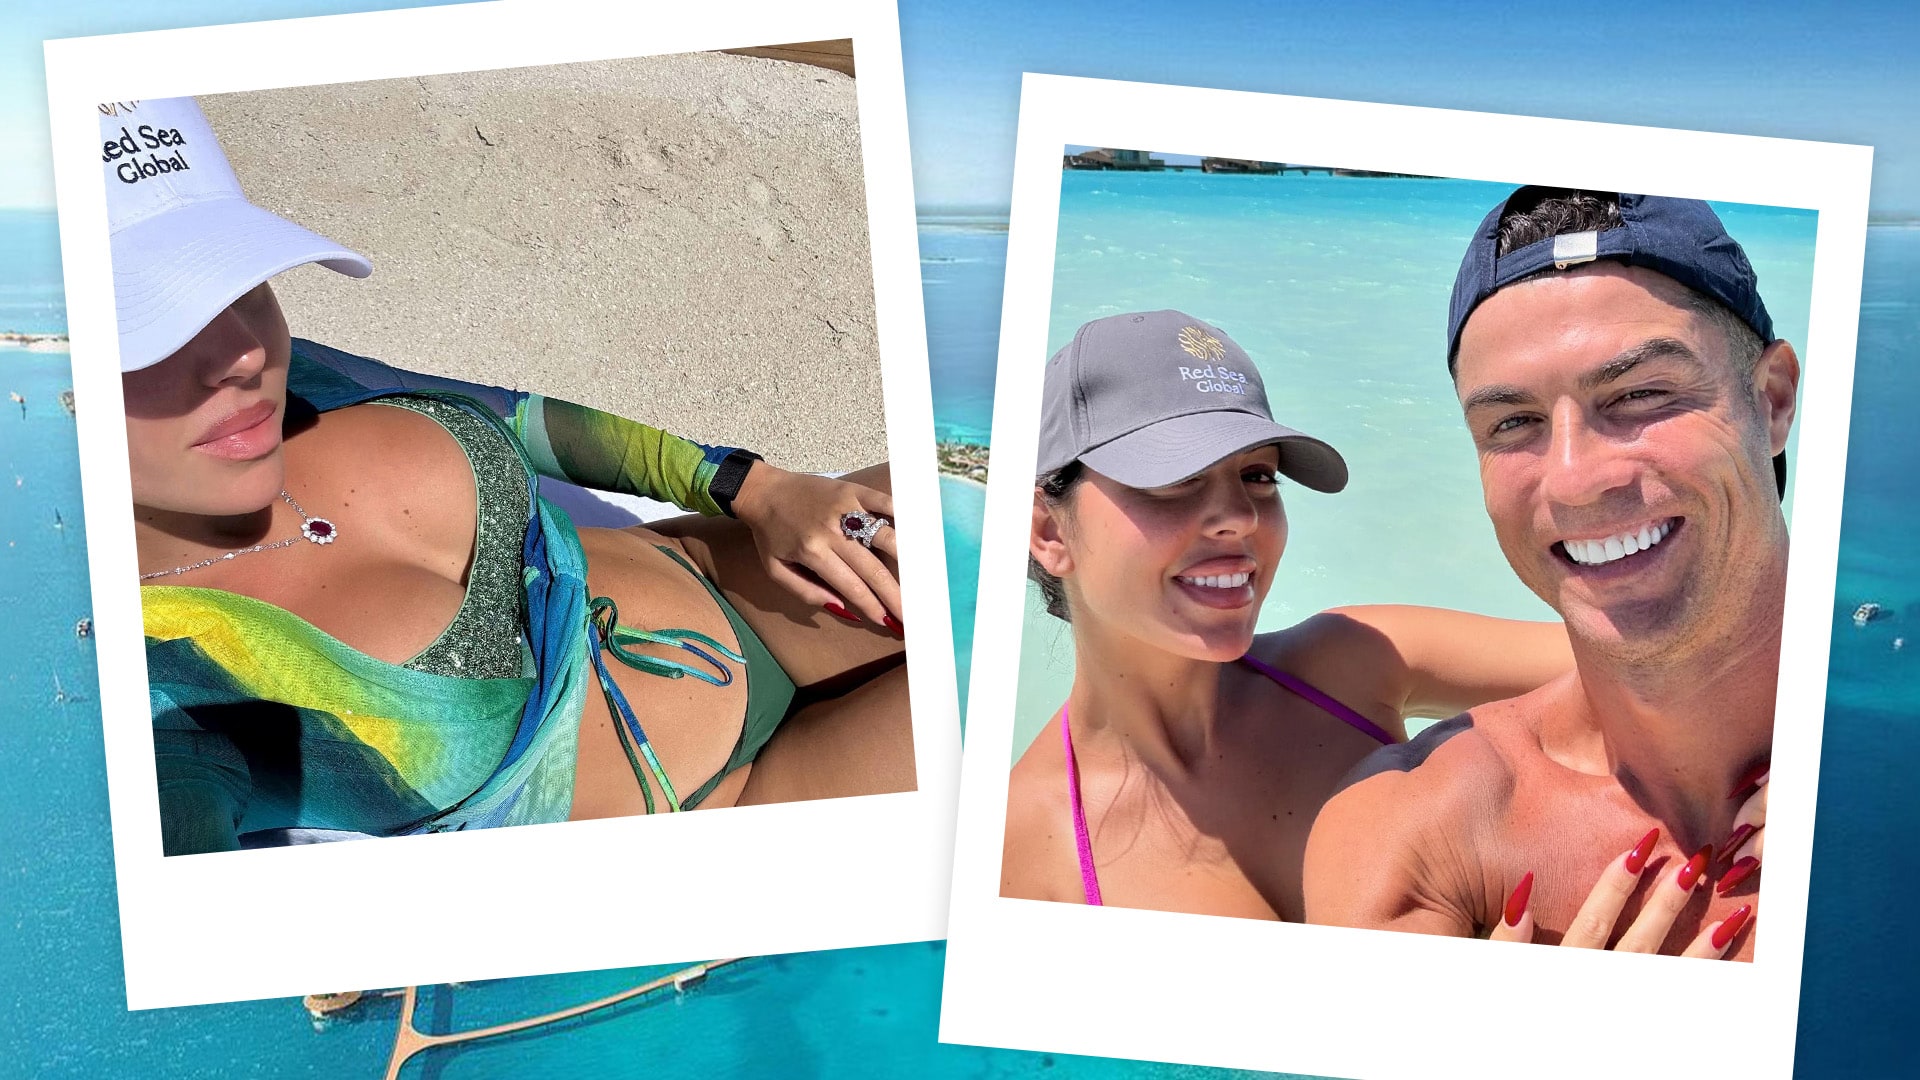 Cristiano Ronaldo’s girlfriend Georgina Rodriguez puts on eye-popping display in bikini pics during family holiday [Video]